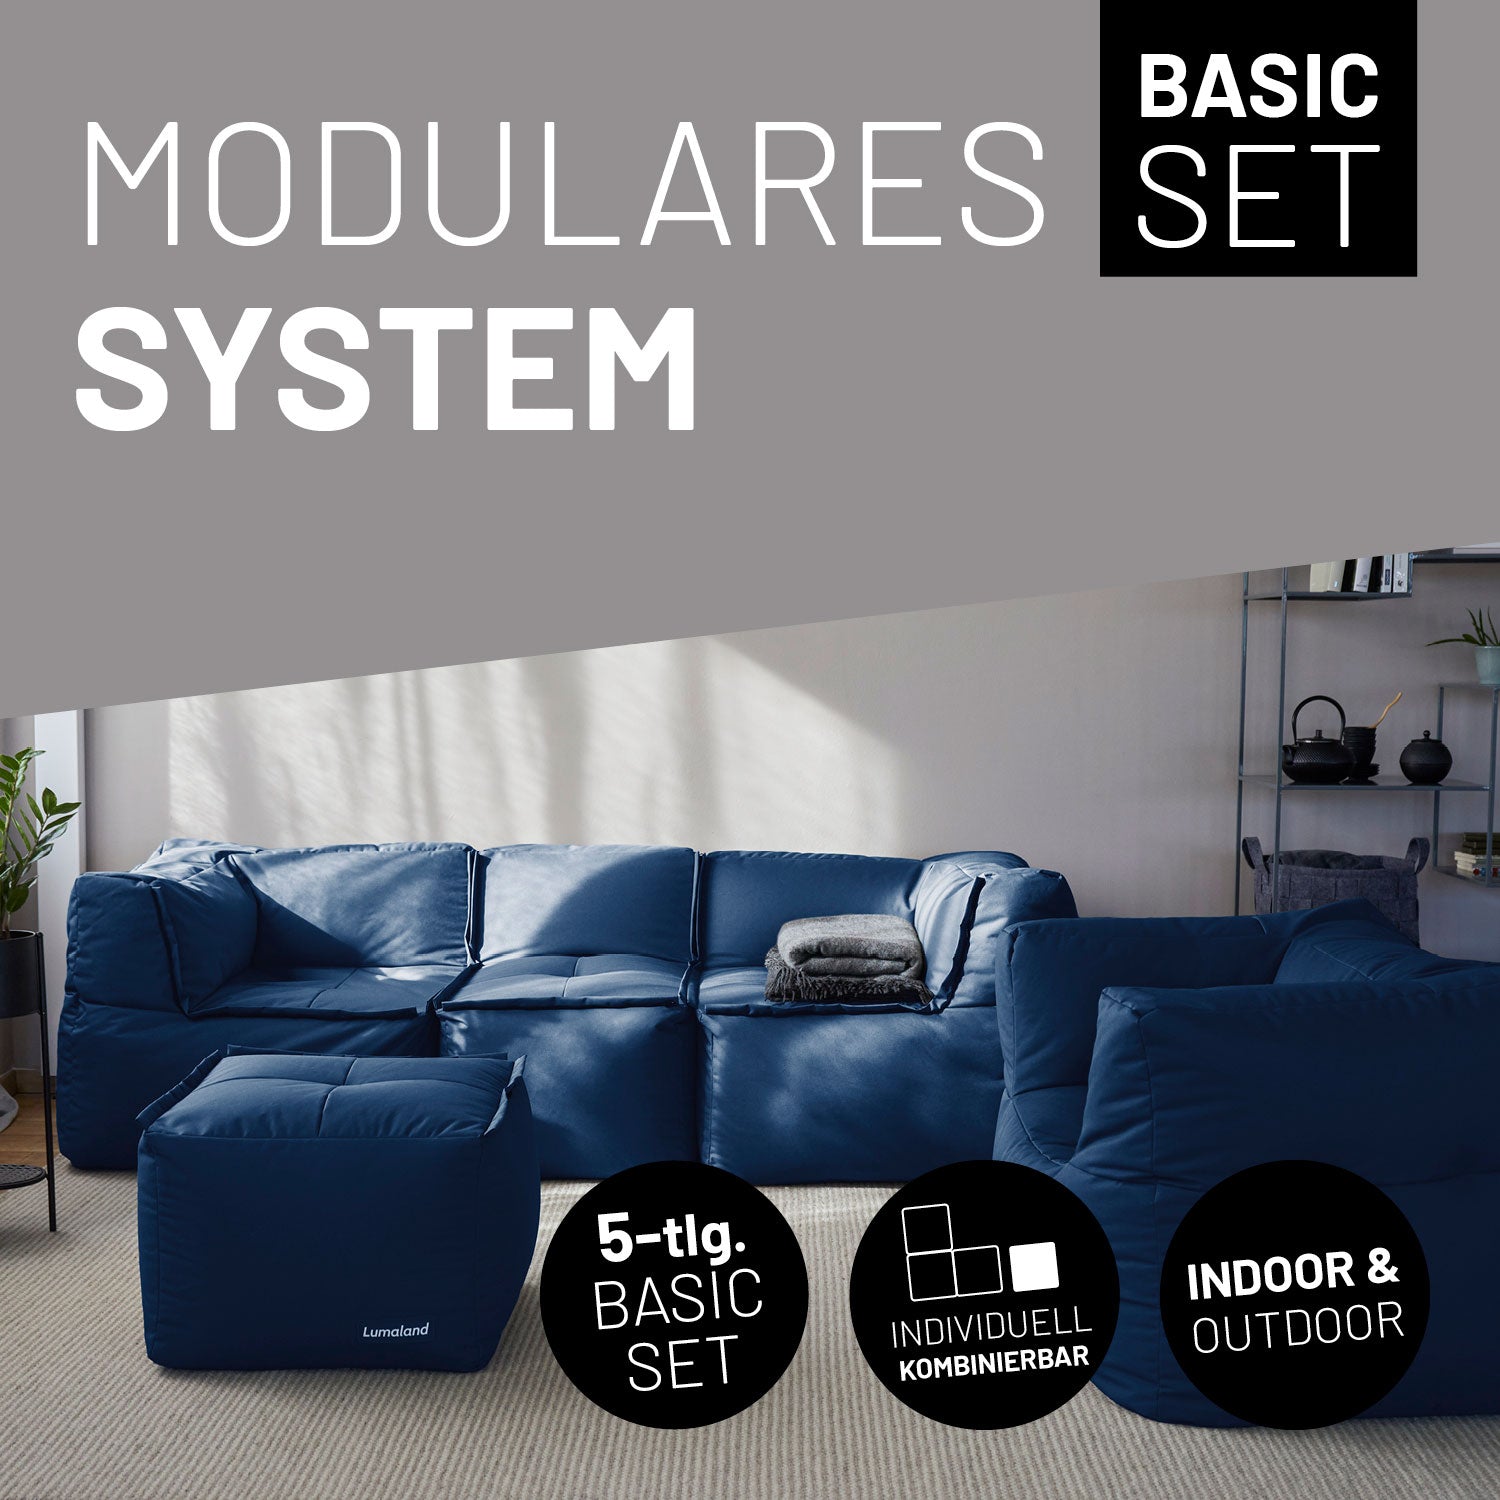 Basic Set (5-tlg.) - Modulares System - In- & outdoor - Navyblau